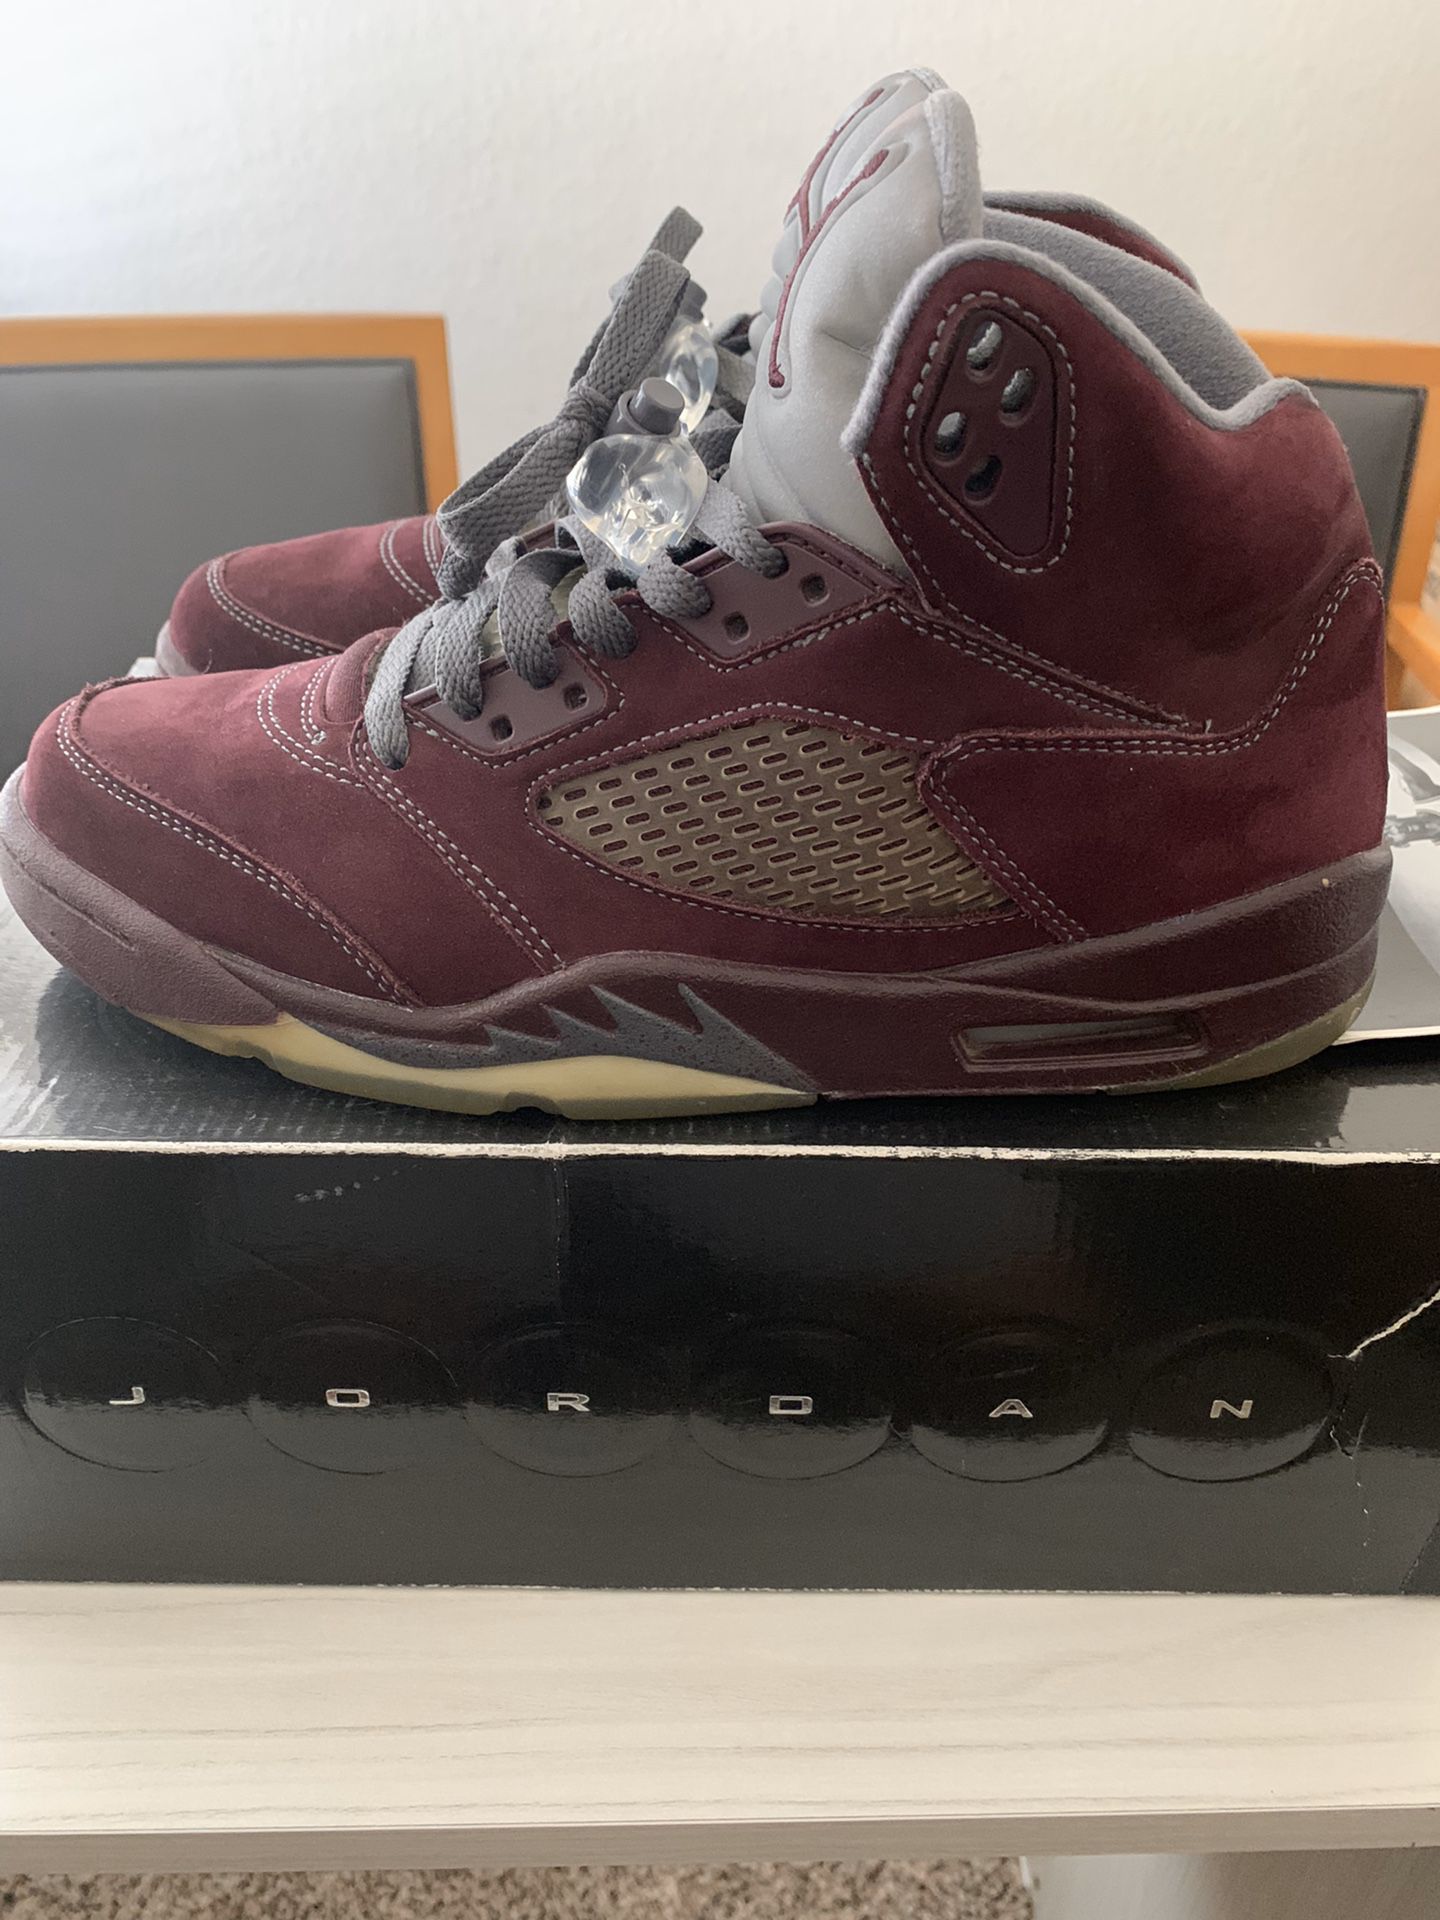 Men’s Nike air Jordan retro 5s burgundy 2006 LS limited shoes size 8